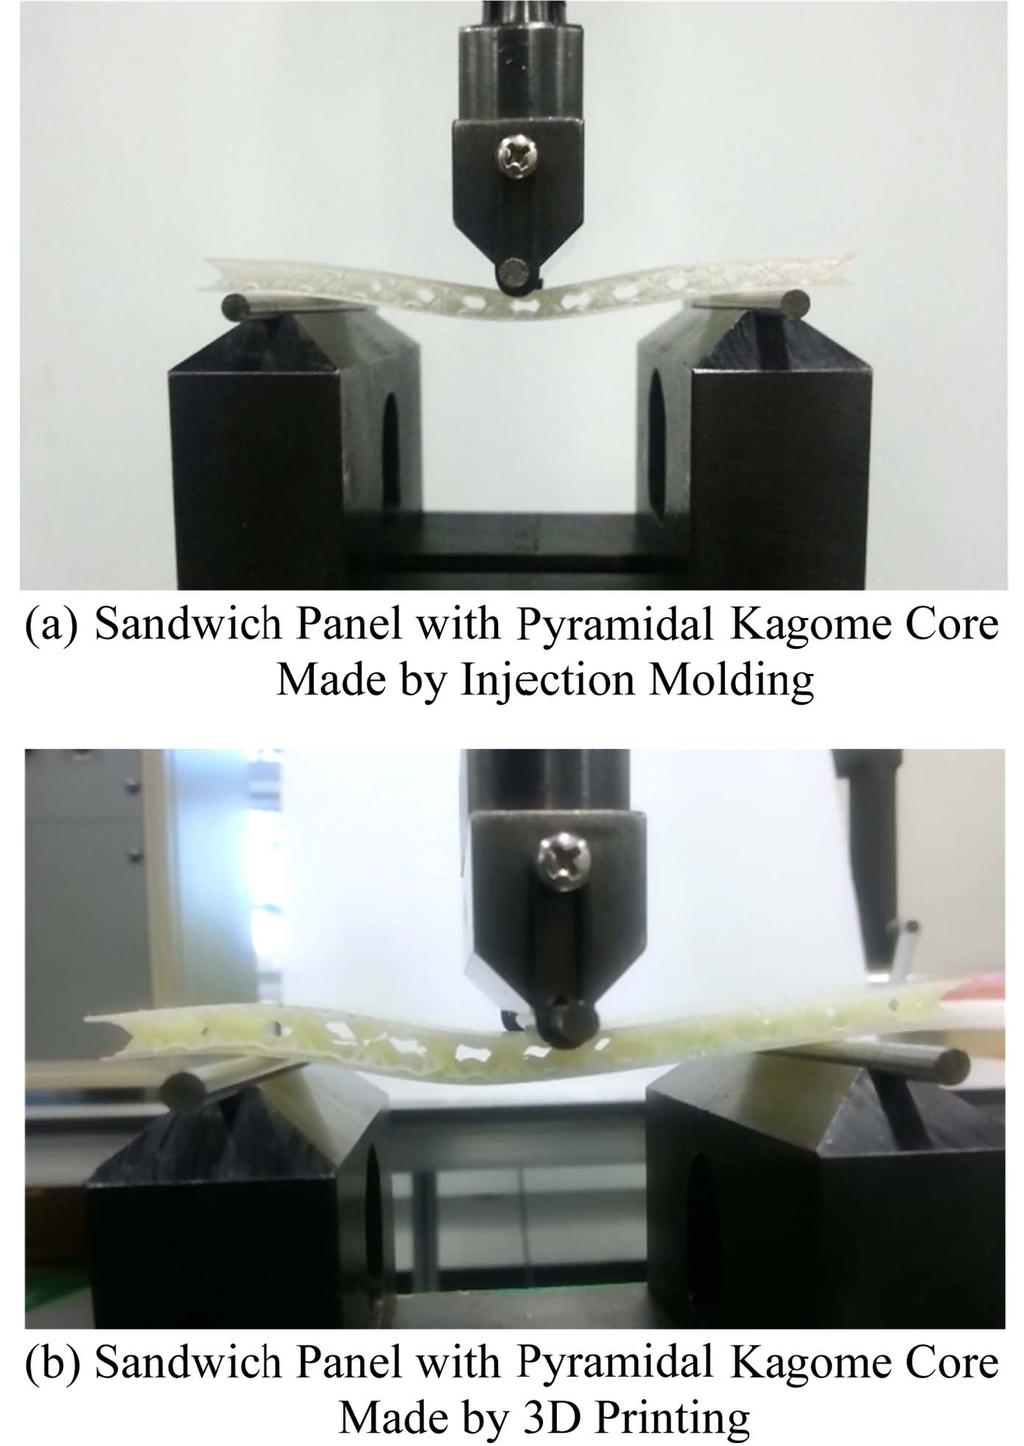 278 K. M. Yang et al. / Elastomers and Composites Vol. 51, No. 4, pp. 275-279 (December 2016) Figure 10. Three Points Bending Test of Pyramidal Kagome Core Sandwich Panel. 변형이많이일어난사출성형스트립이크다. 2. 복합판재의 3 점굽힘시험 사출성형과 3D 프린팅으로제작한피라미달카고메코어를이용한두가지의복합판재로 3점굽힘시험을했다.